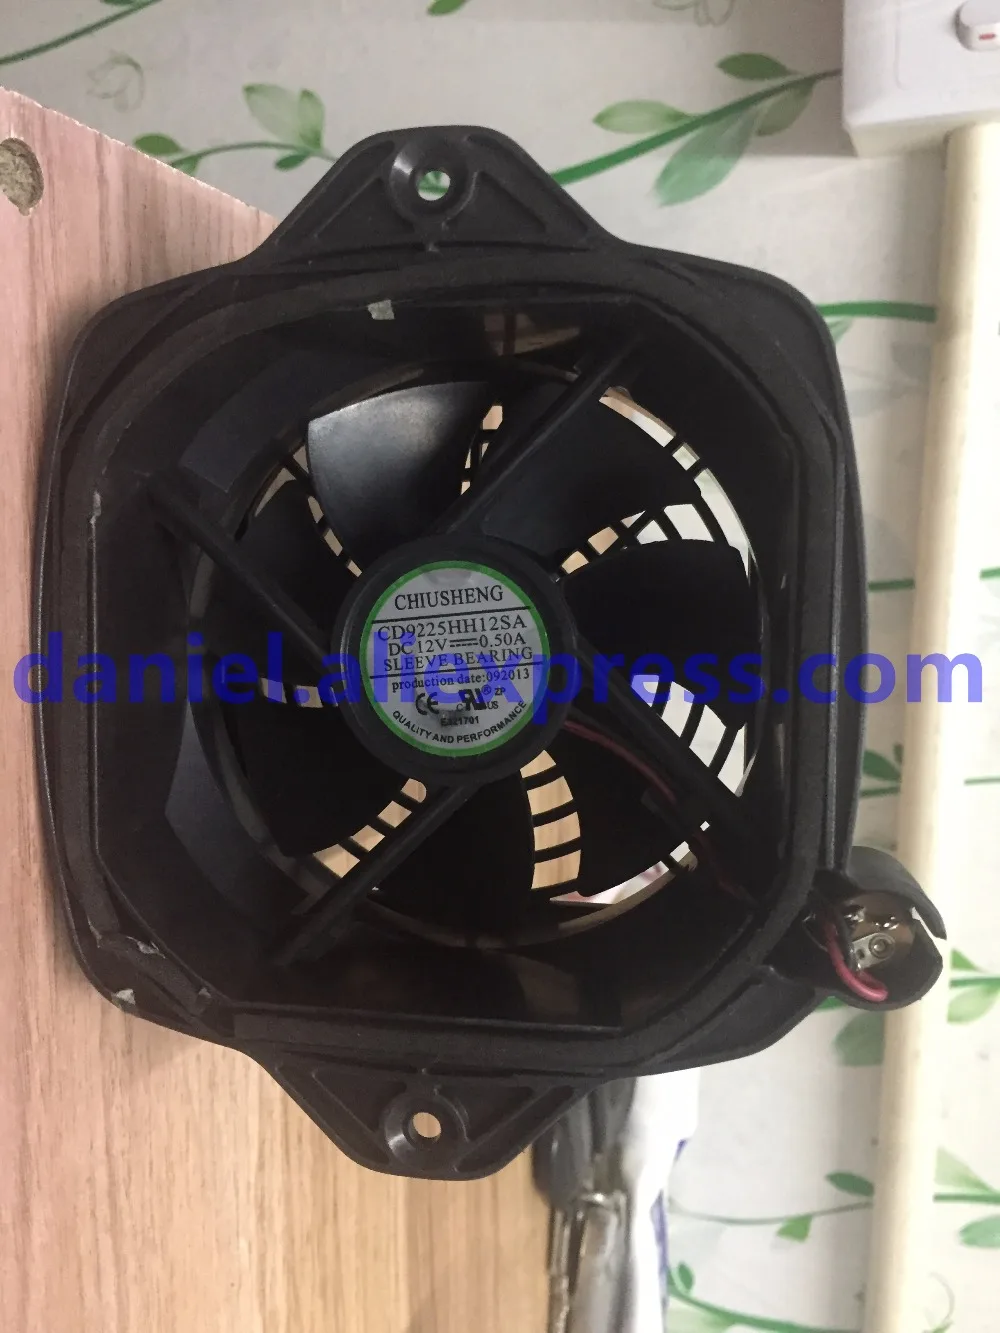 Original CD9225H12SA 12V 0.50A dryer frequency converter radiator fan